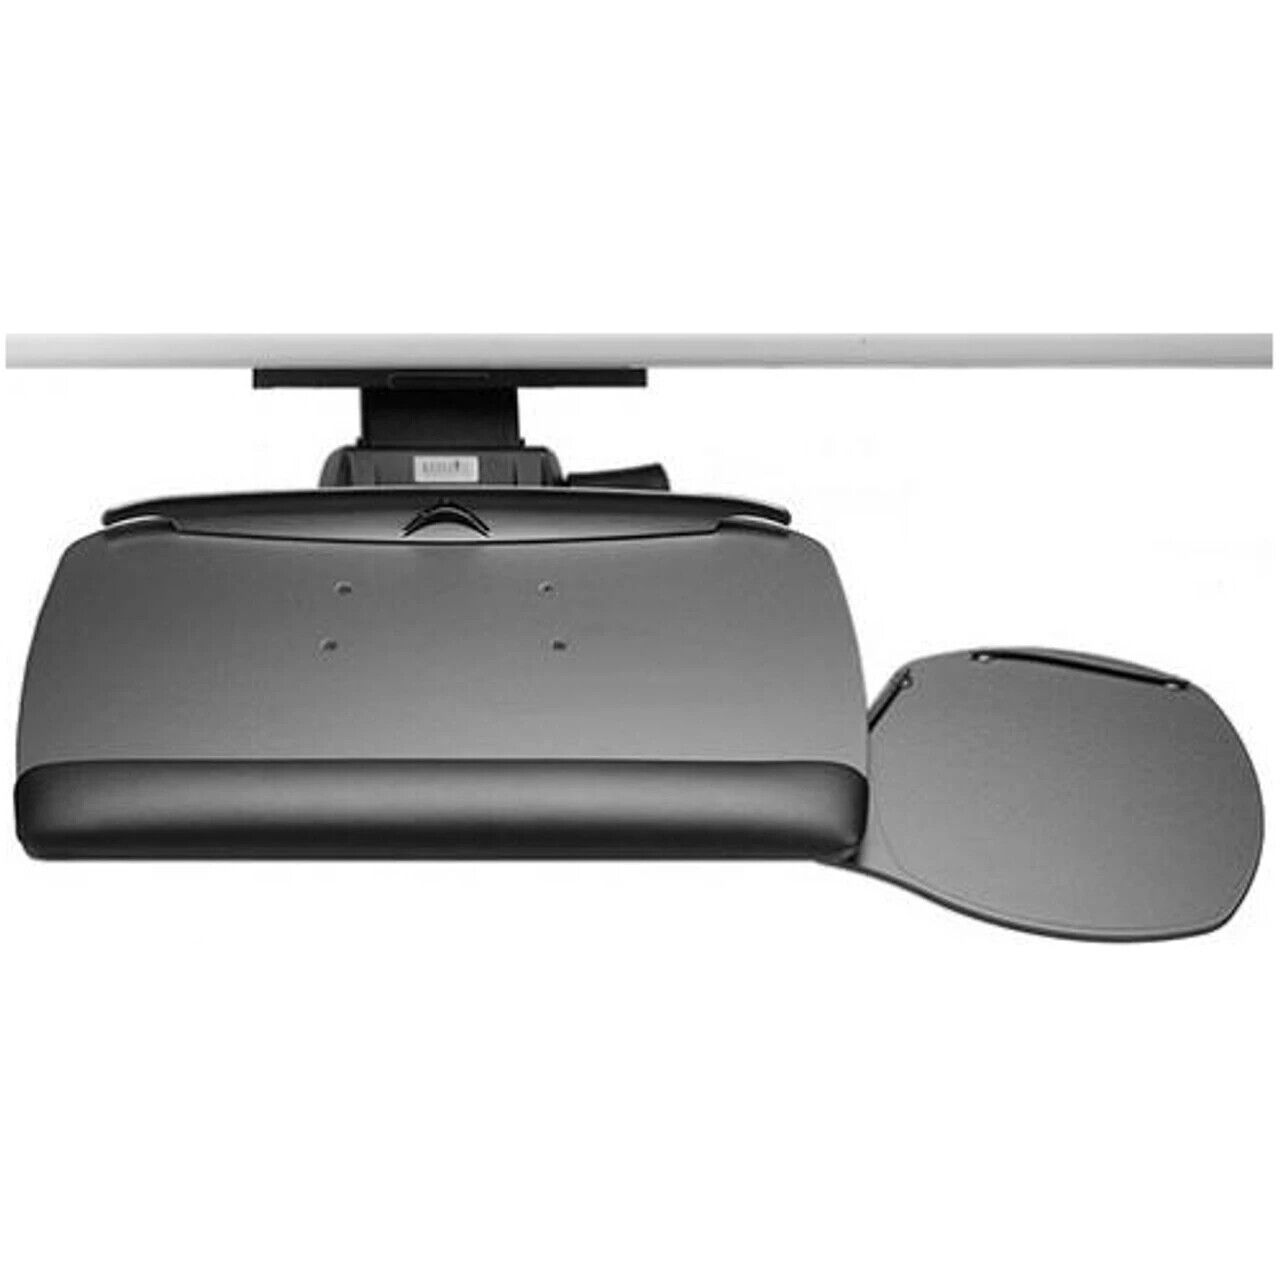 WorkRite Dual Mouse-Under Keyboard Platform - 22 Pinnacle Arm and track 2144-22